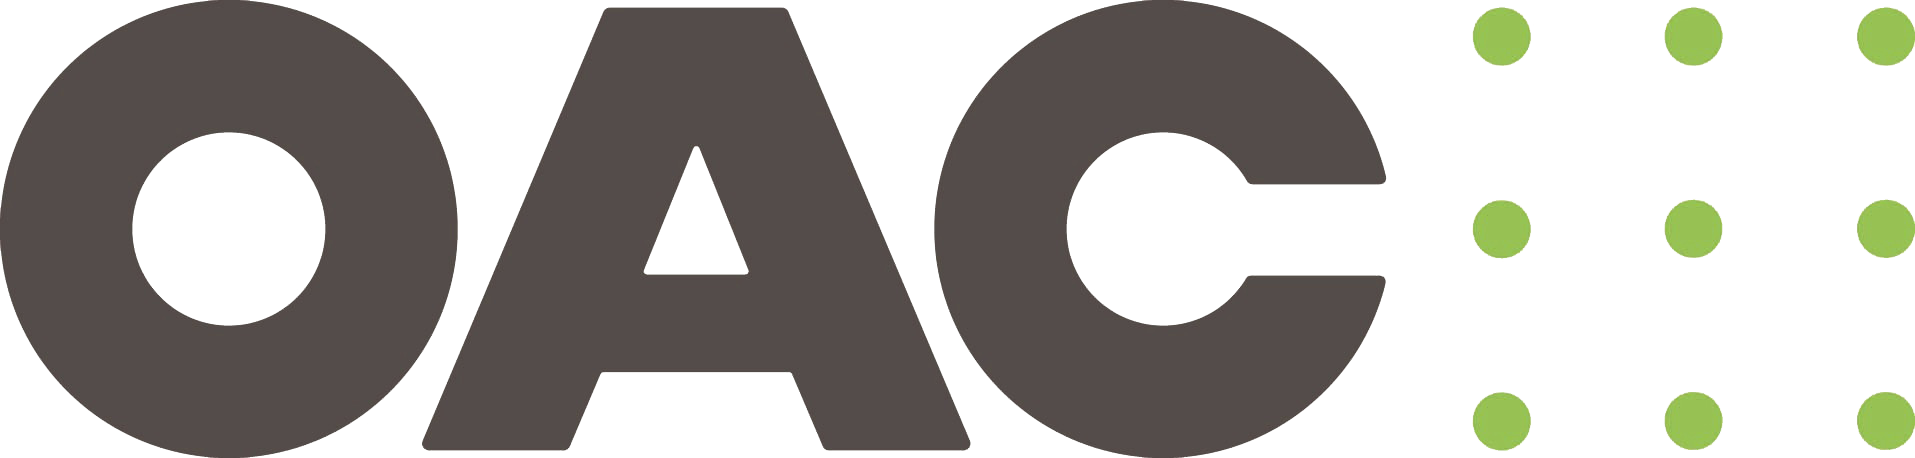 OAC small logo.png